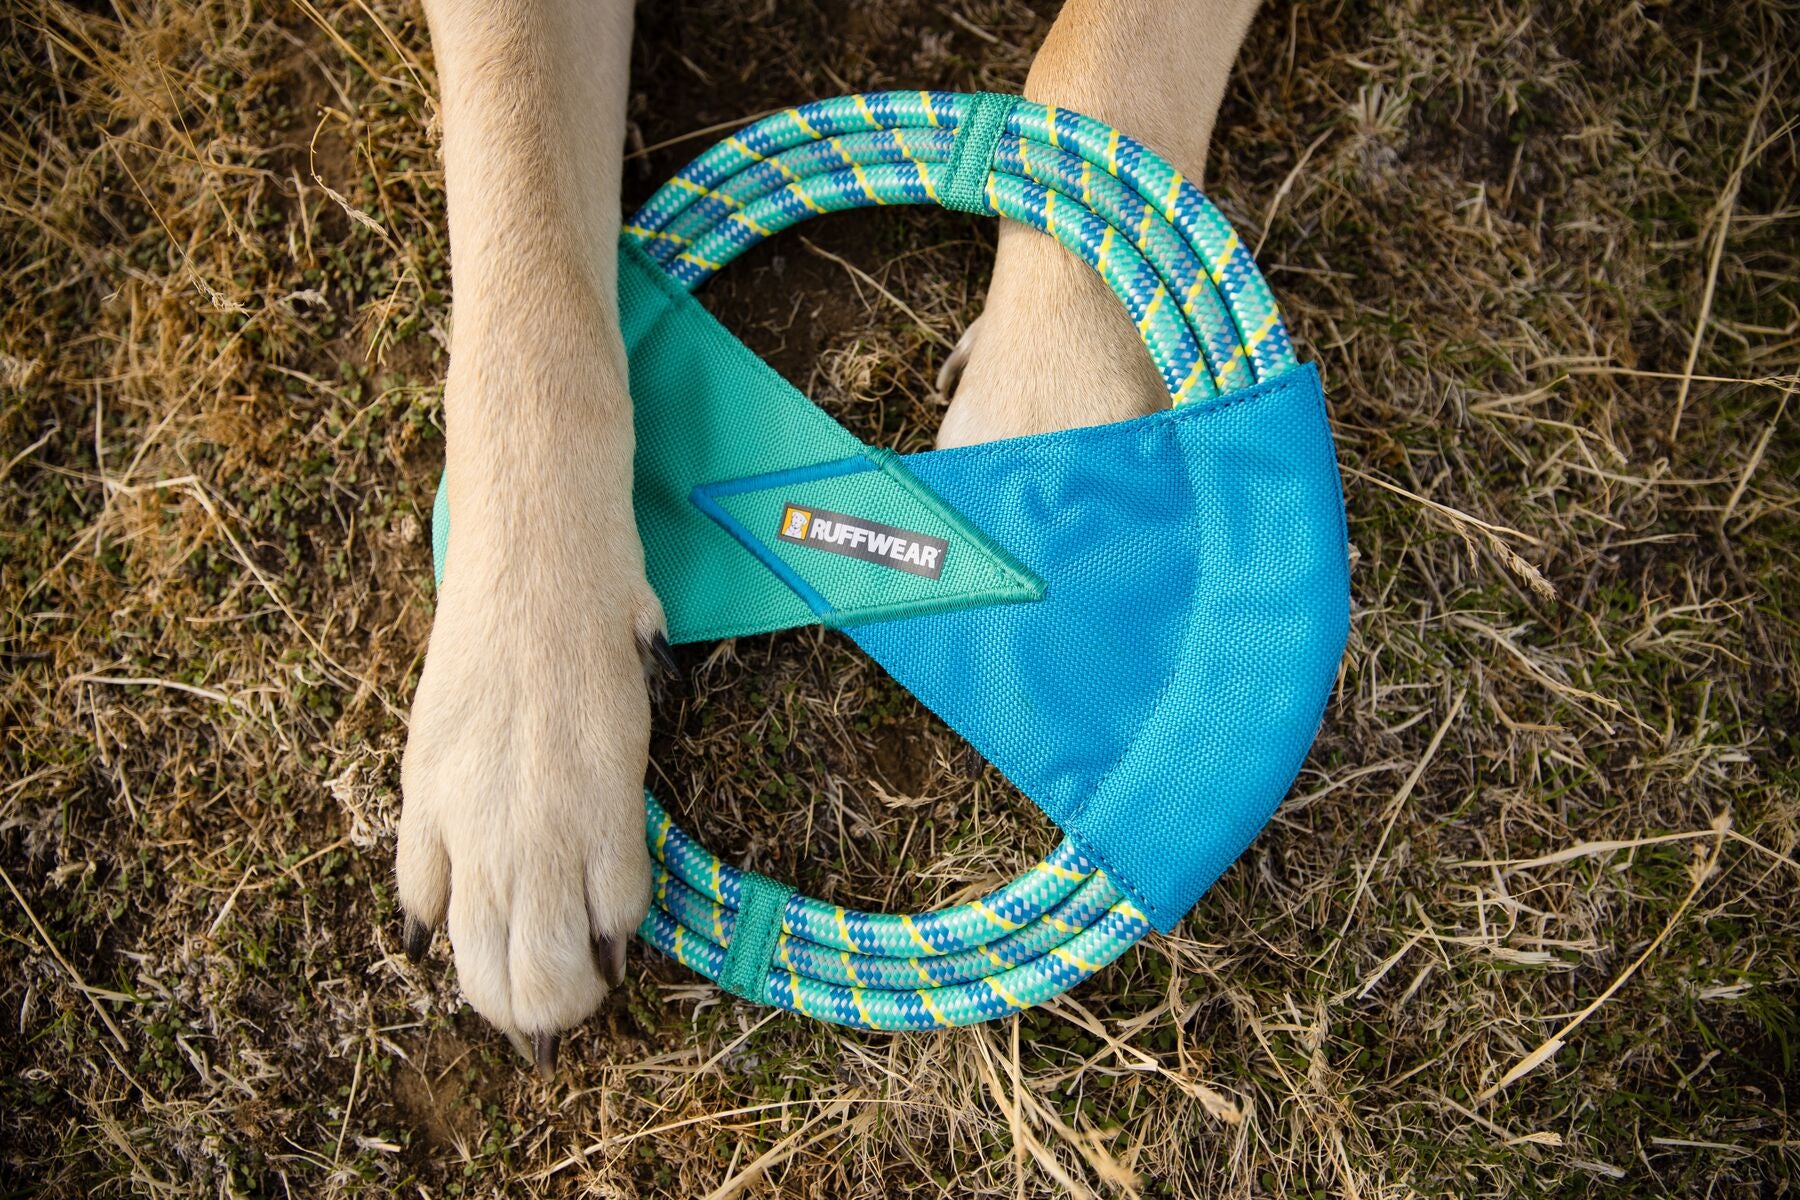 Disco para perros Verde/Amarillo - Pacific Ring Toy- de Ruffwear®